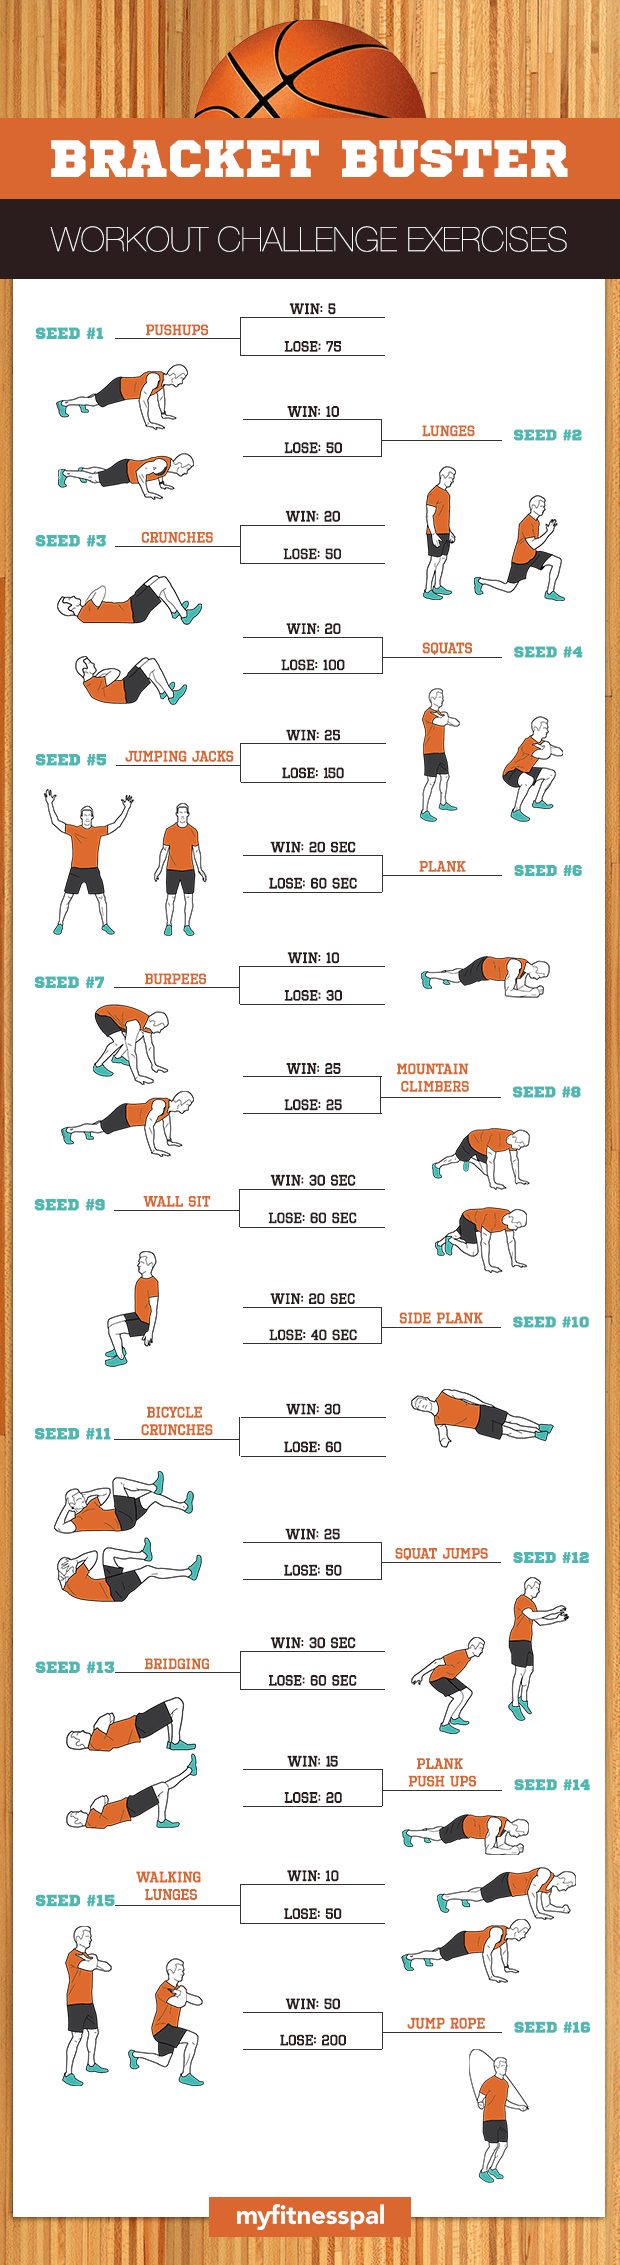 bracket buster workout challenge exercises